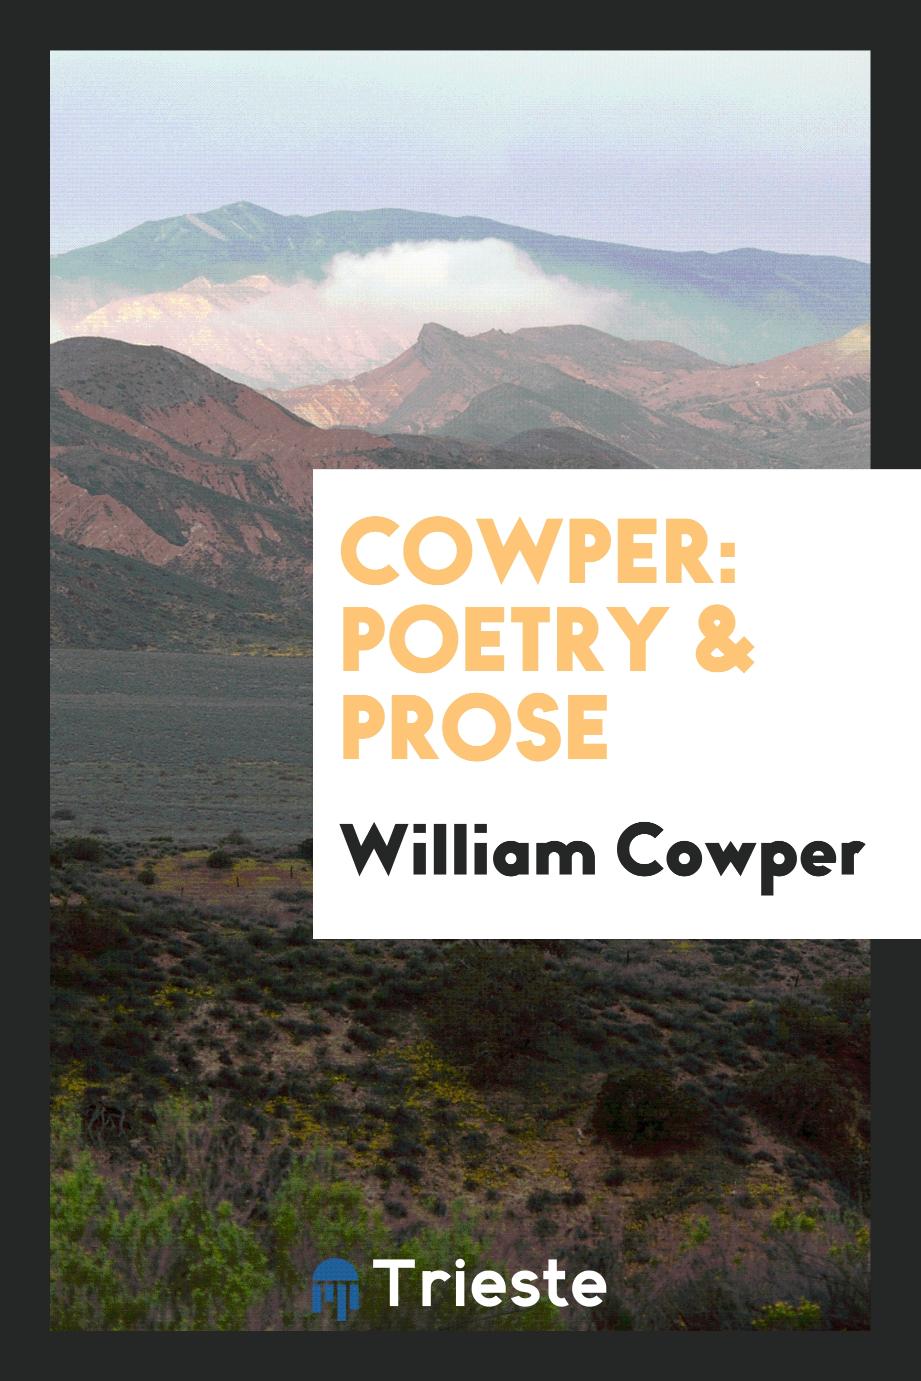 Cowper: poetry & prose